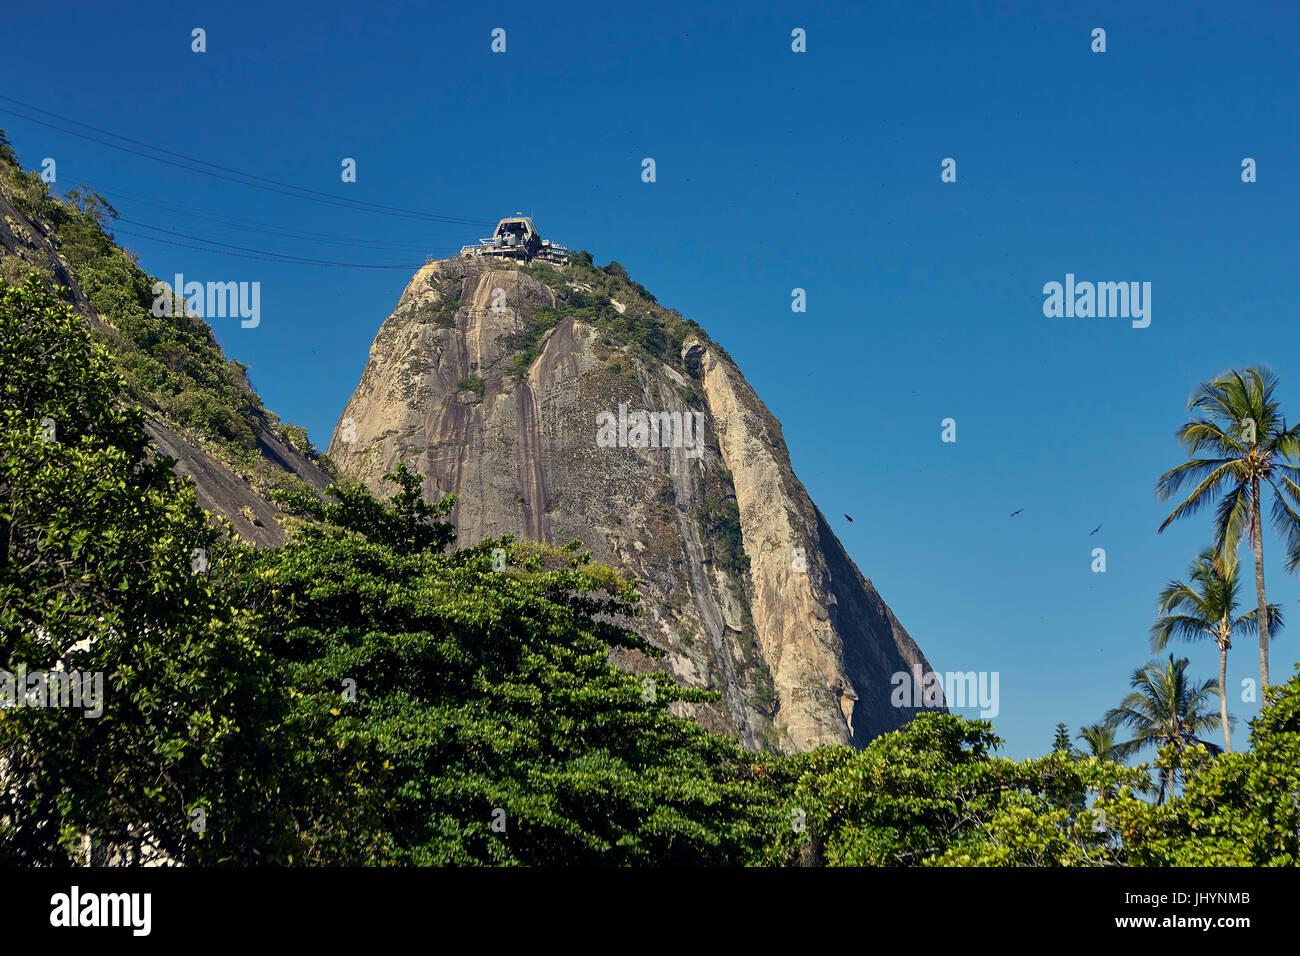 Views of Sugarloaf mountain (Pao de Acucar), early evening, Rio de Janeiro, Brazil, South America Stock Photo